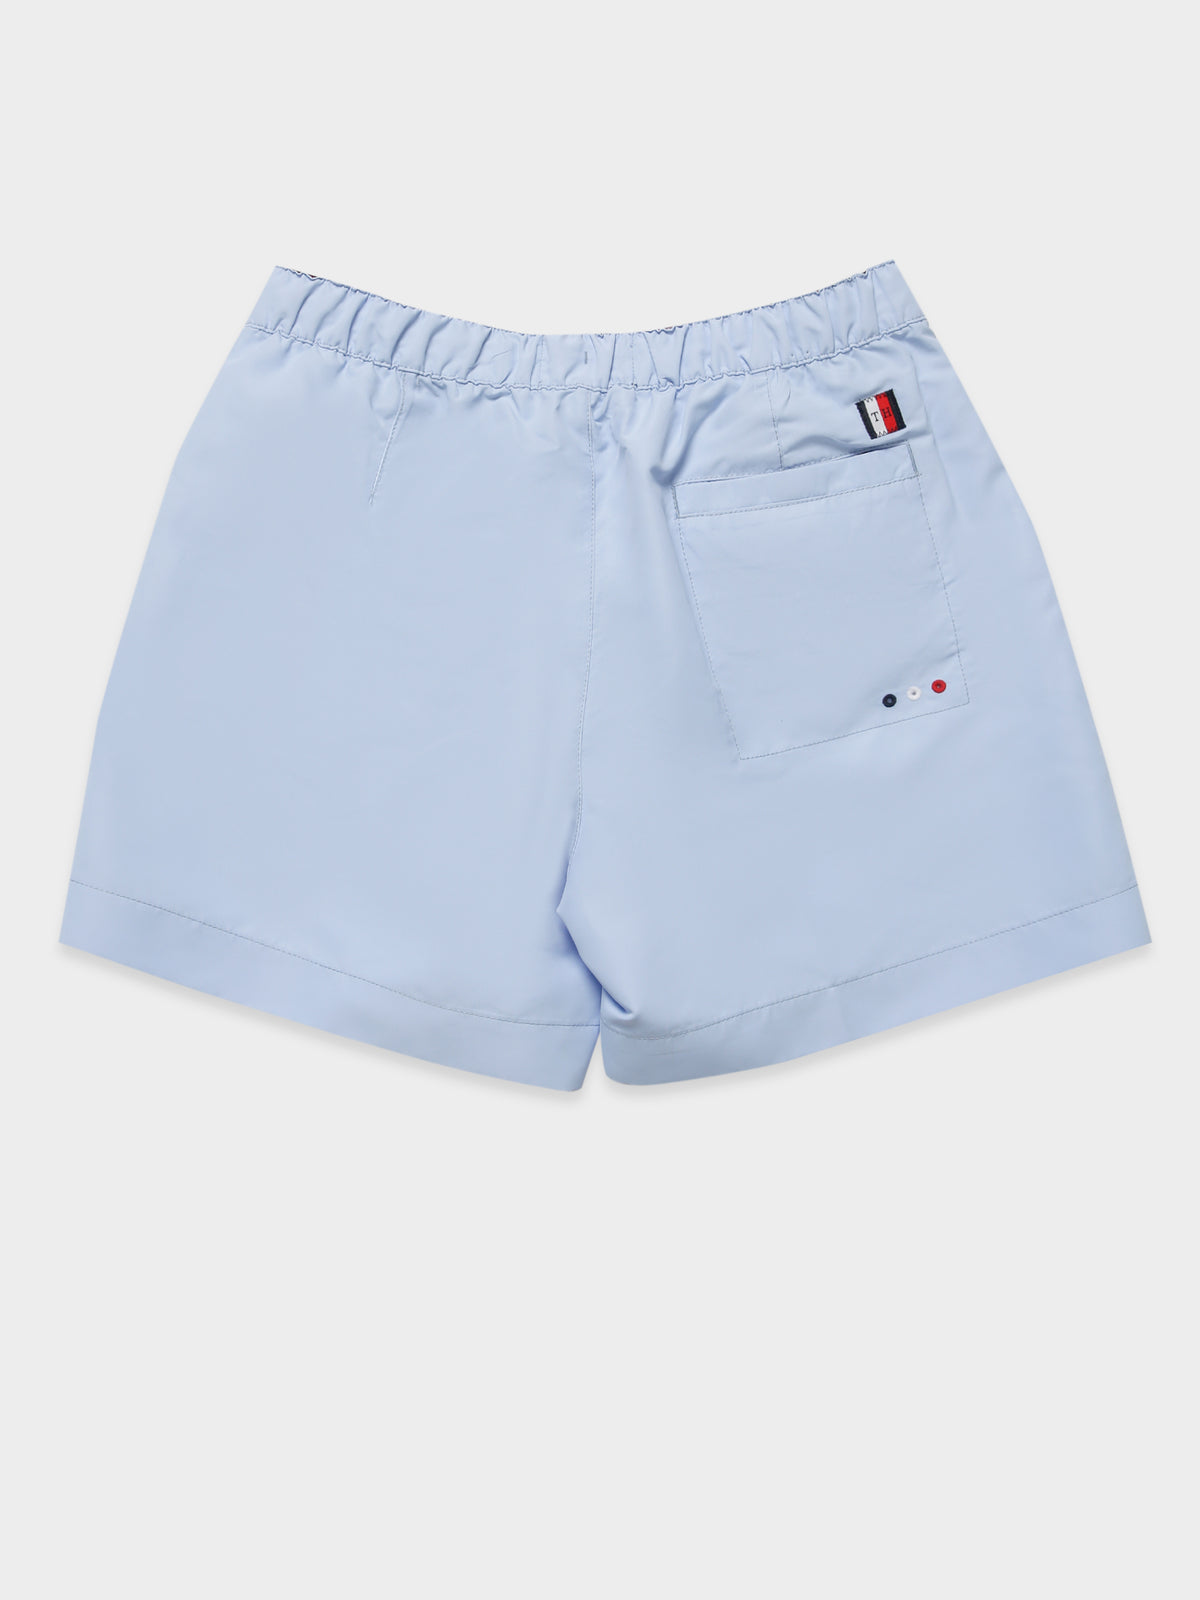 Hilfiger Logo Shorts in Light Blue